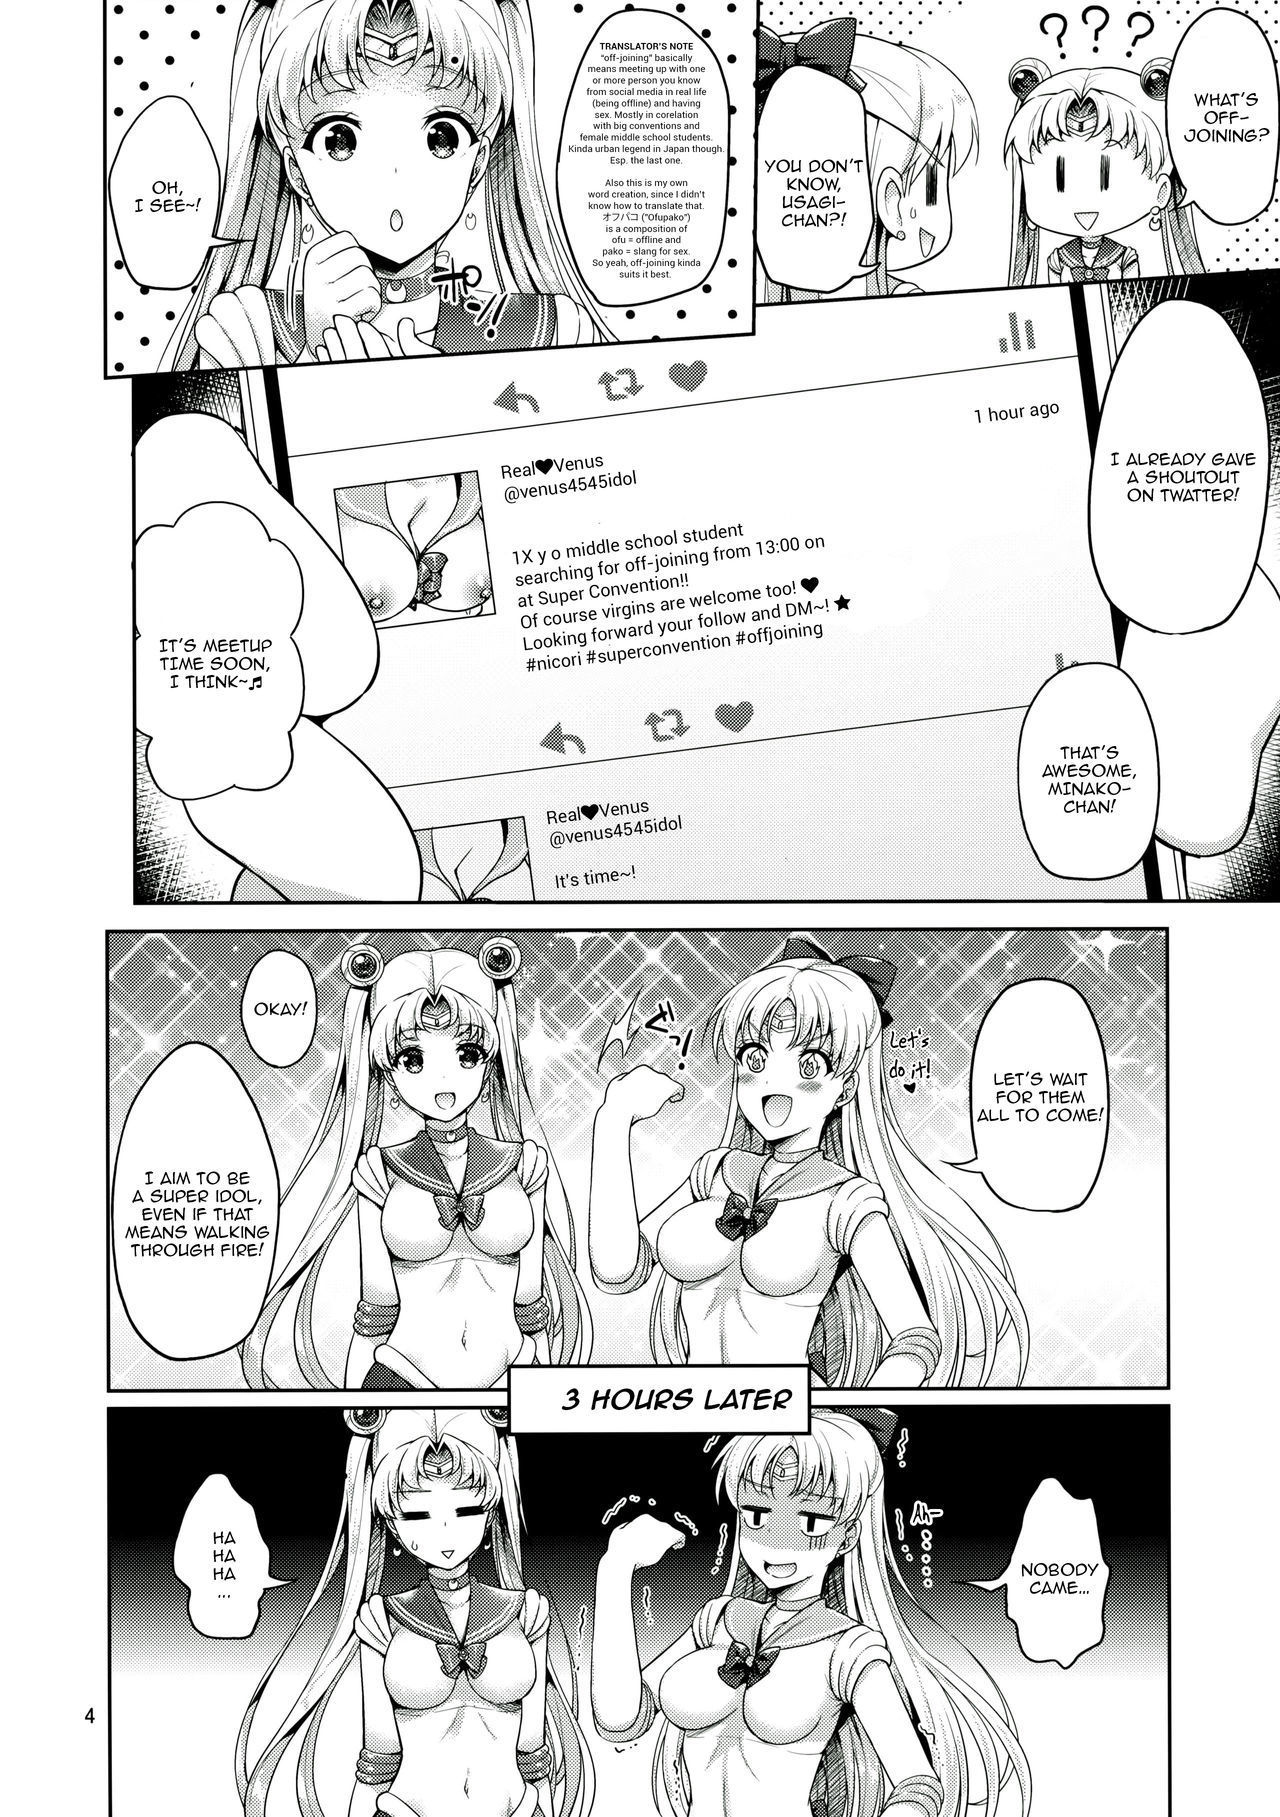 Asahina Hikage page 3